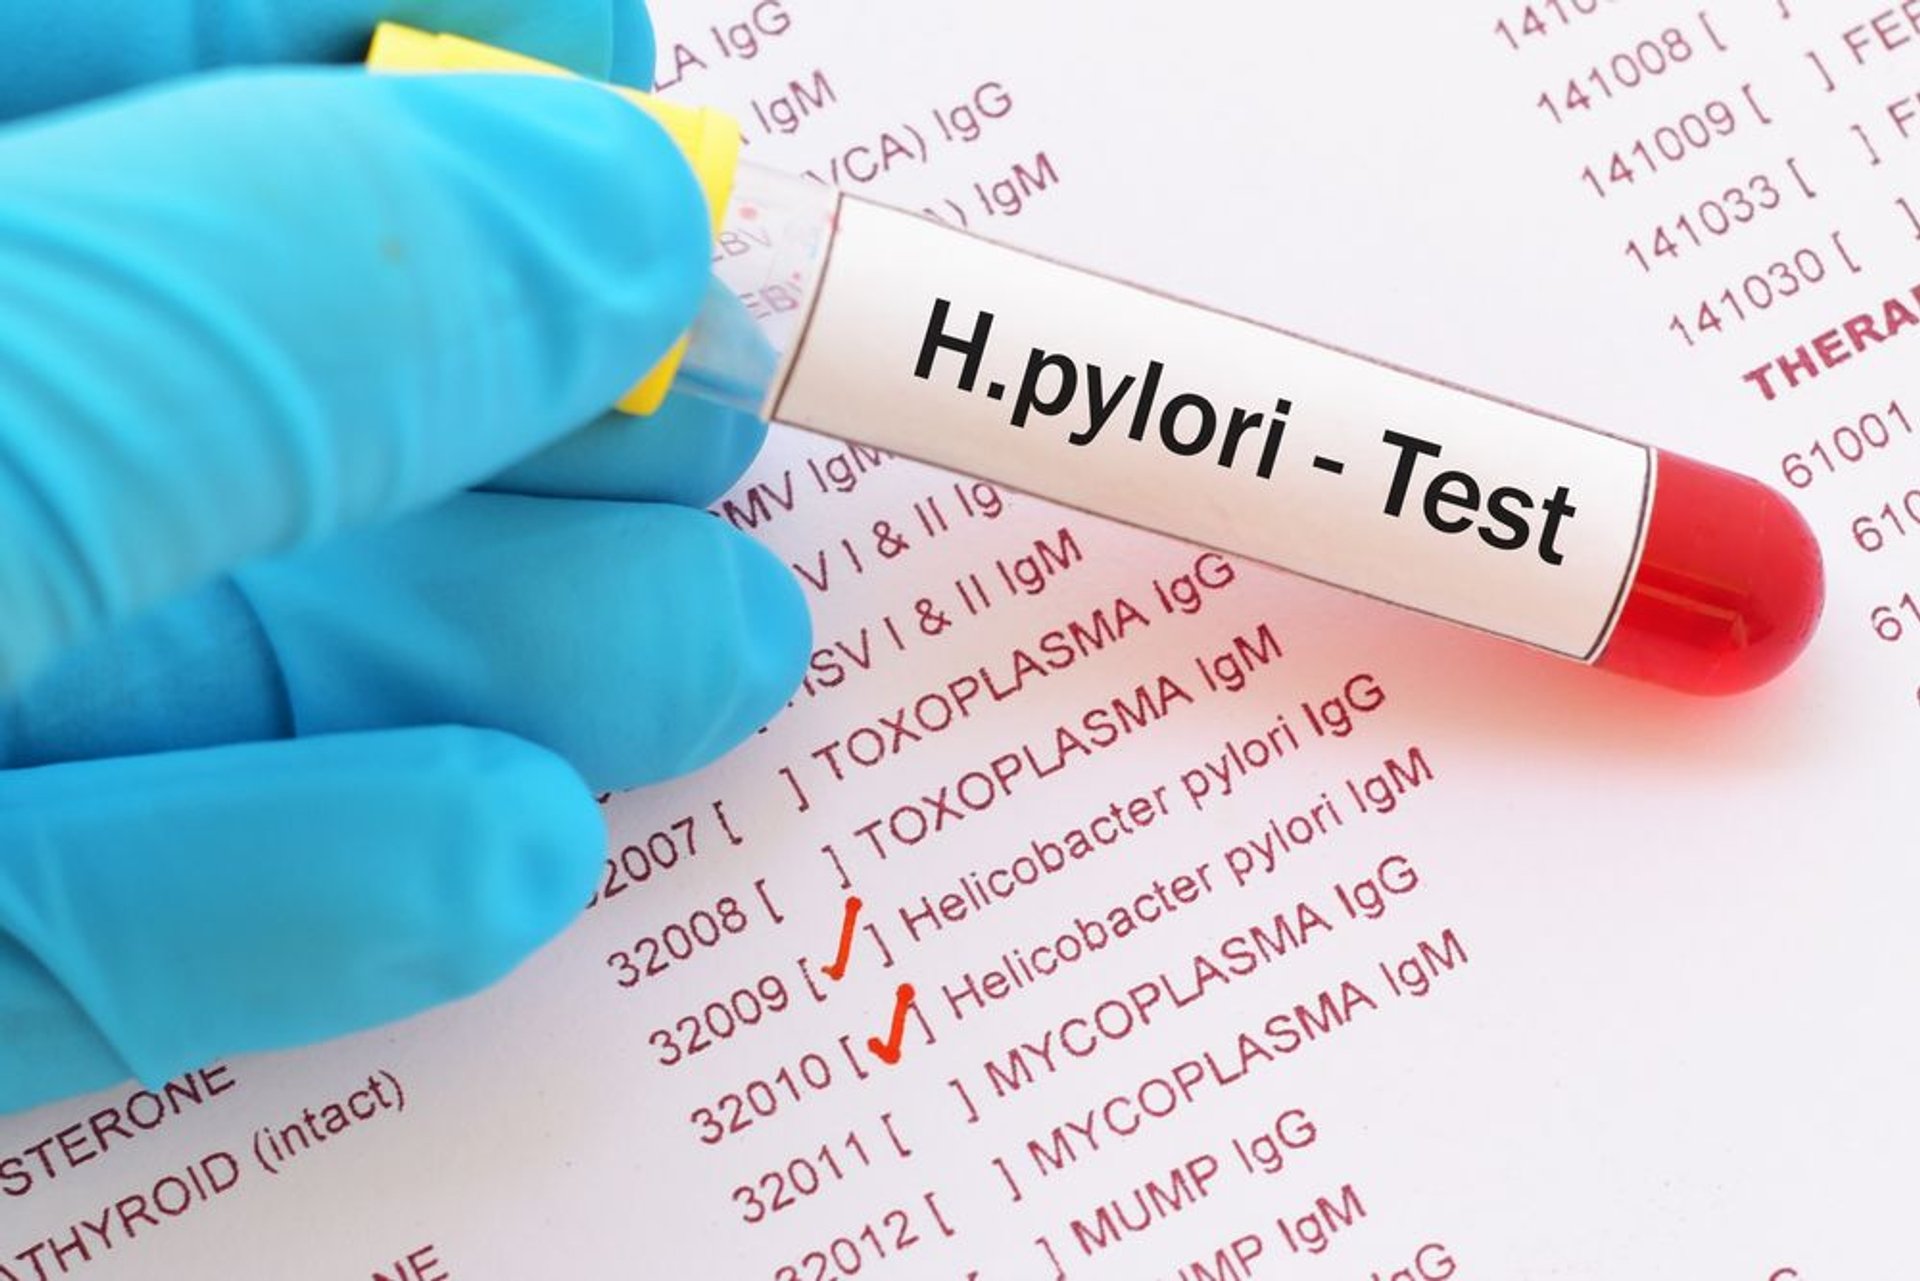 H.pylori test